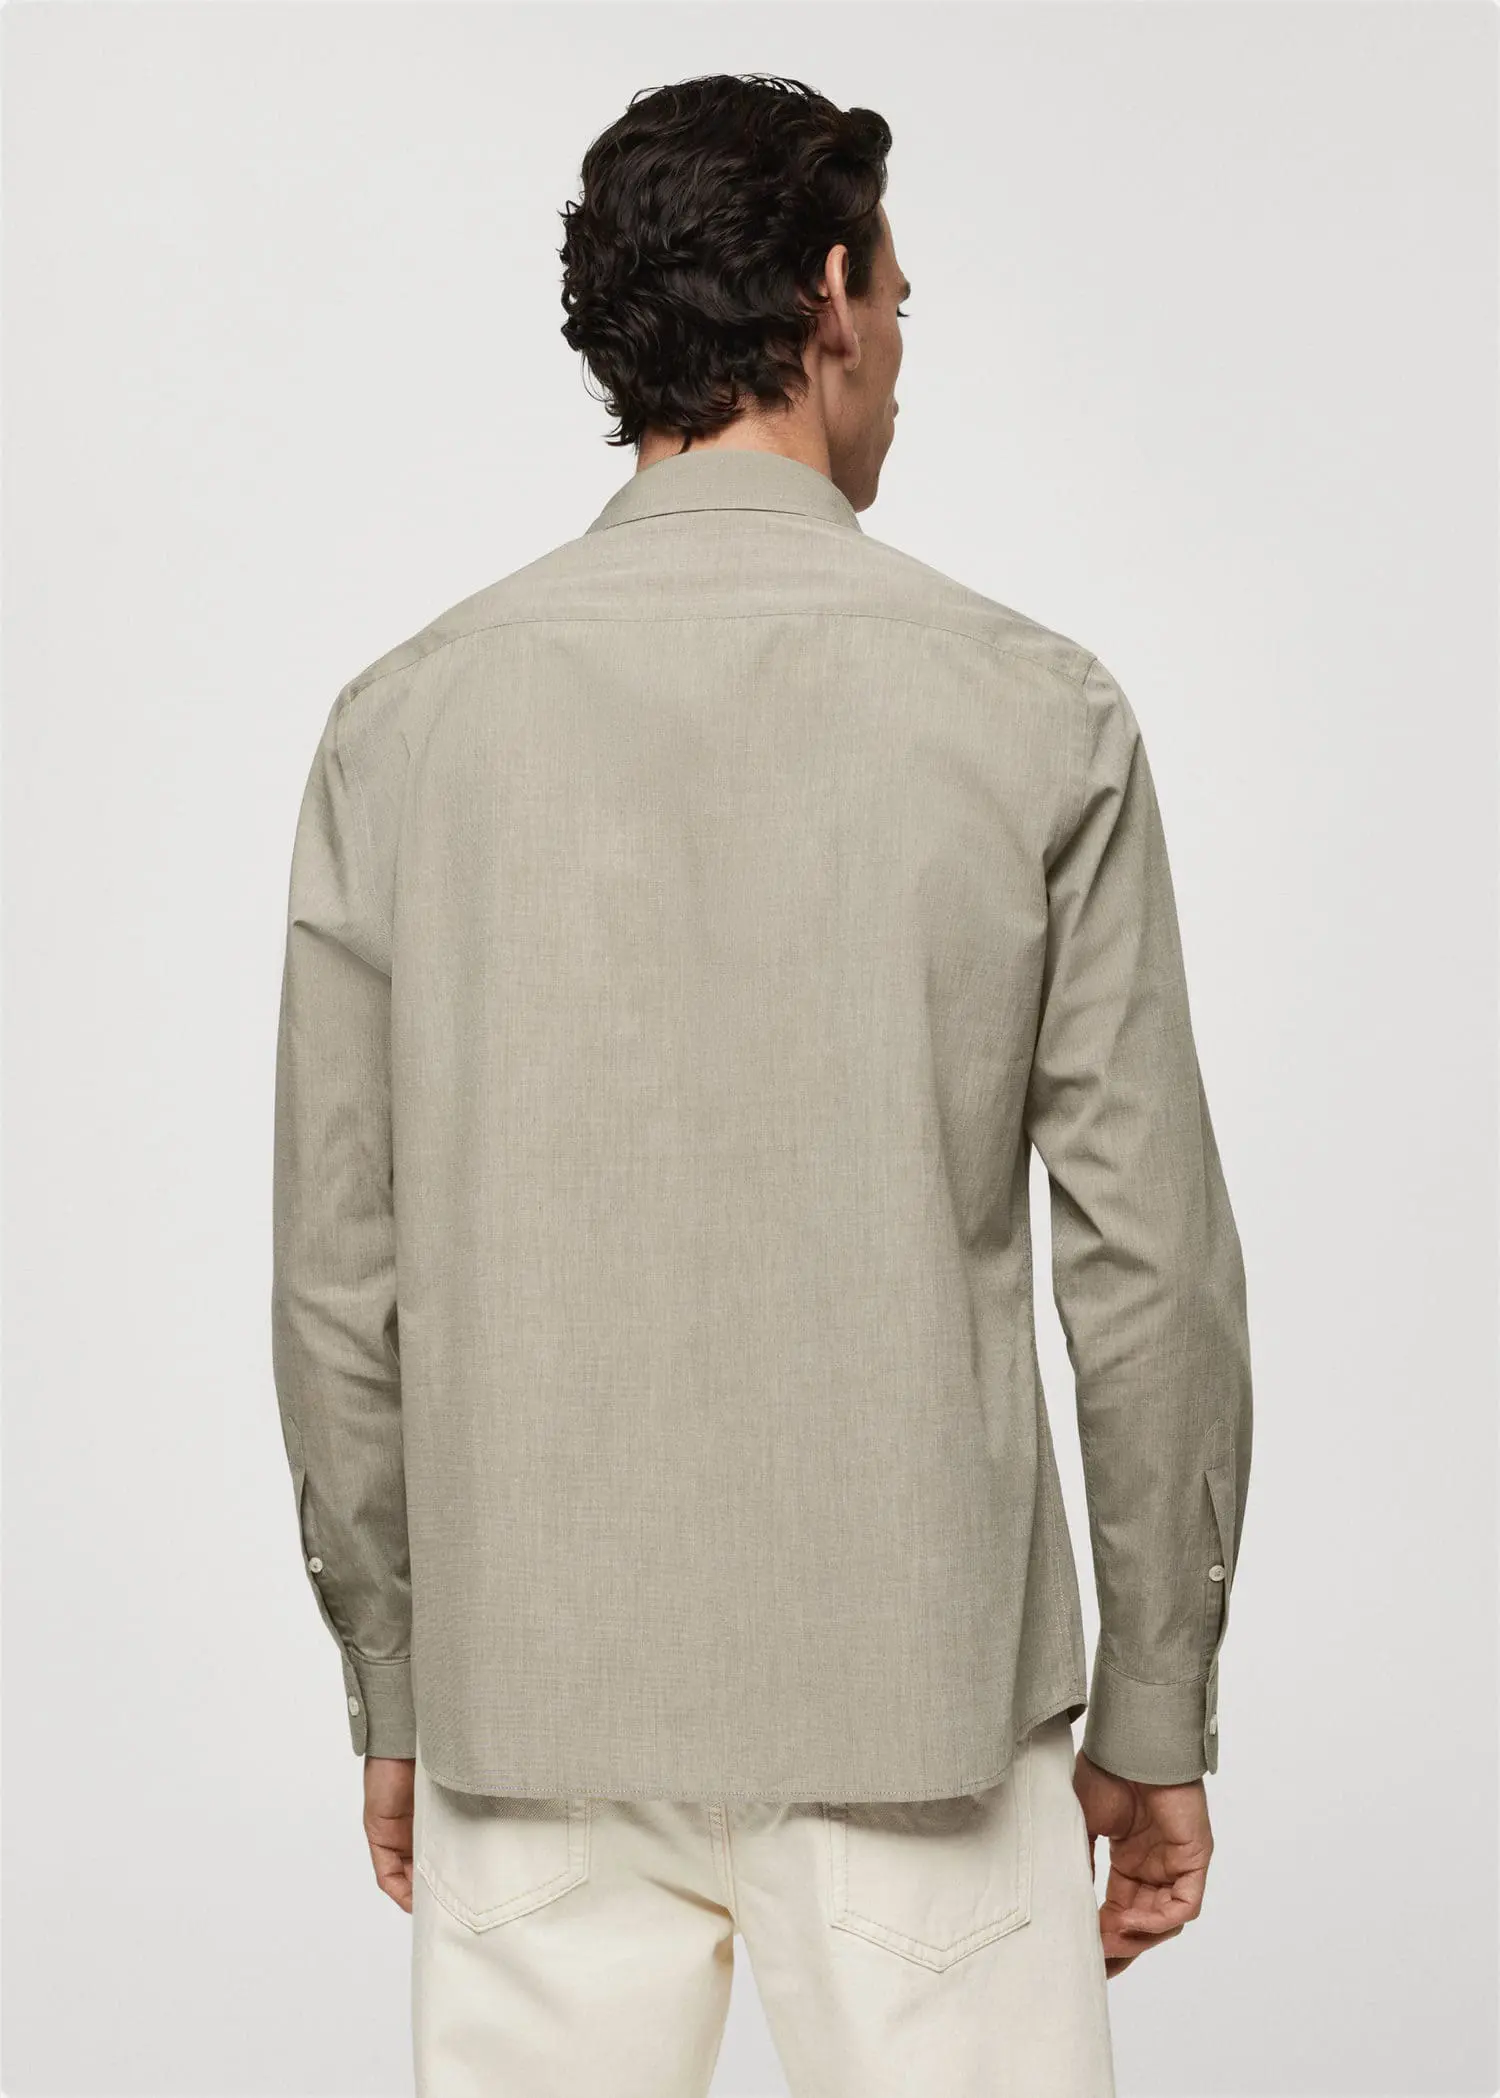 Mango Fil-à-fil cotton shirt. 3